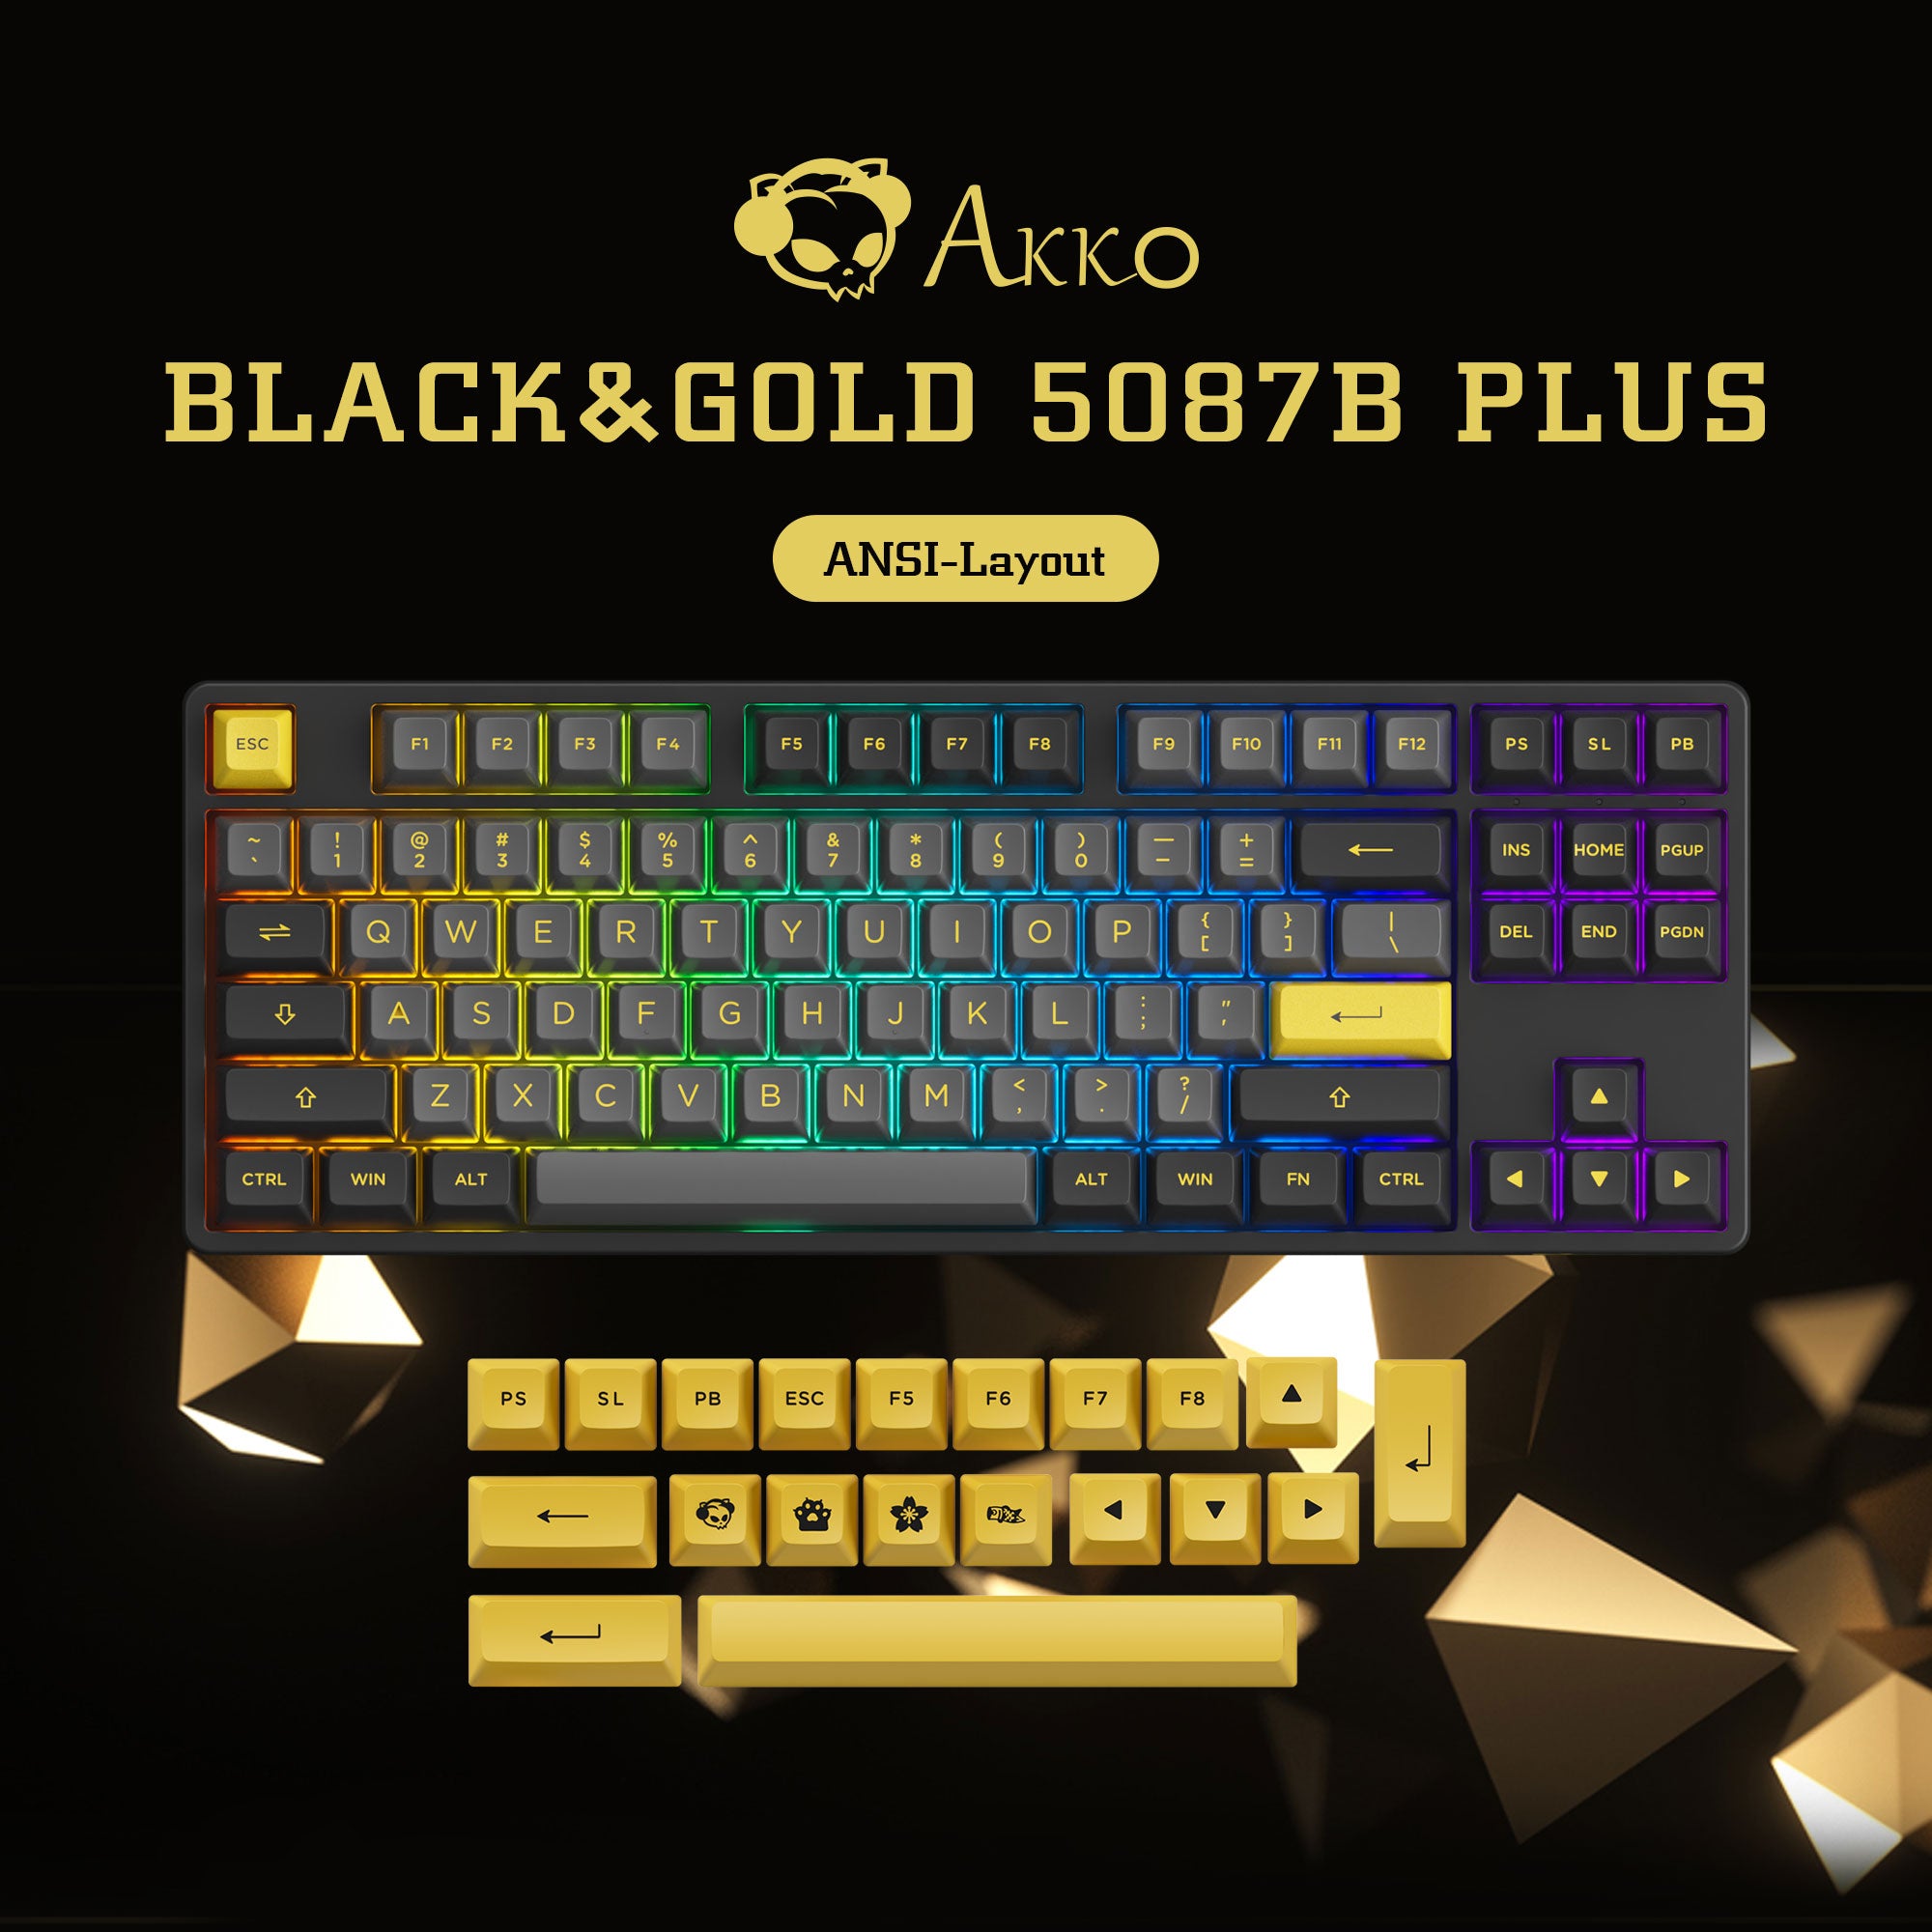 Black & Gold 5087B Plus